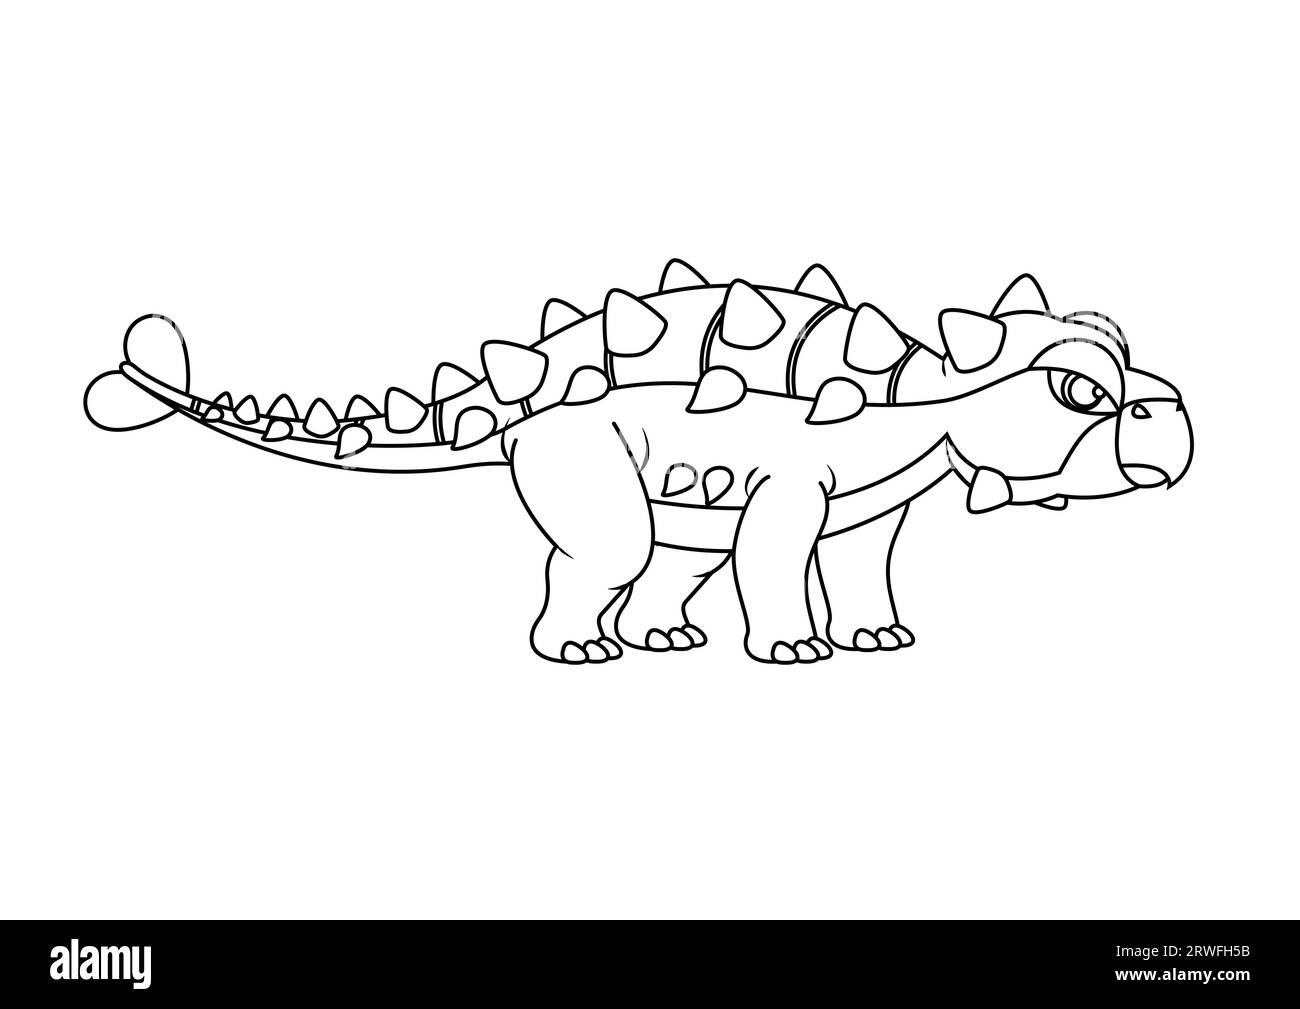 Black and White Ankylosaurus Dinosaur Cartoon Character Vector. Coloring Page of a Ankylosaurus Dinosaur Stock Vector